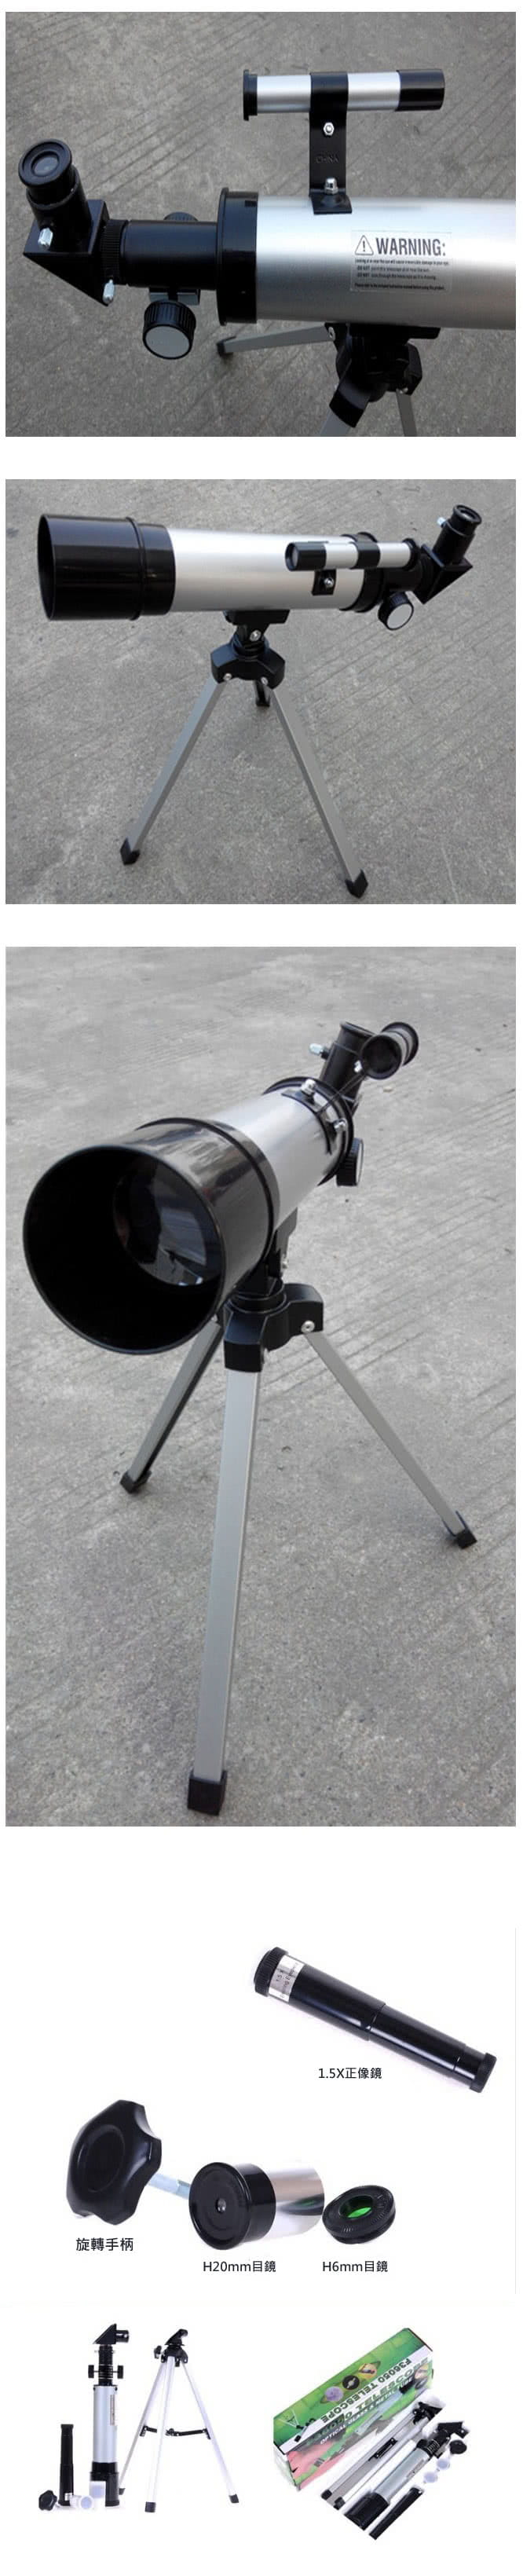 F36050 天文望遠鏡 最高90倍 口徑50mm(觀星 賞鳥) 1